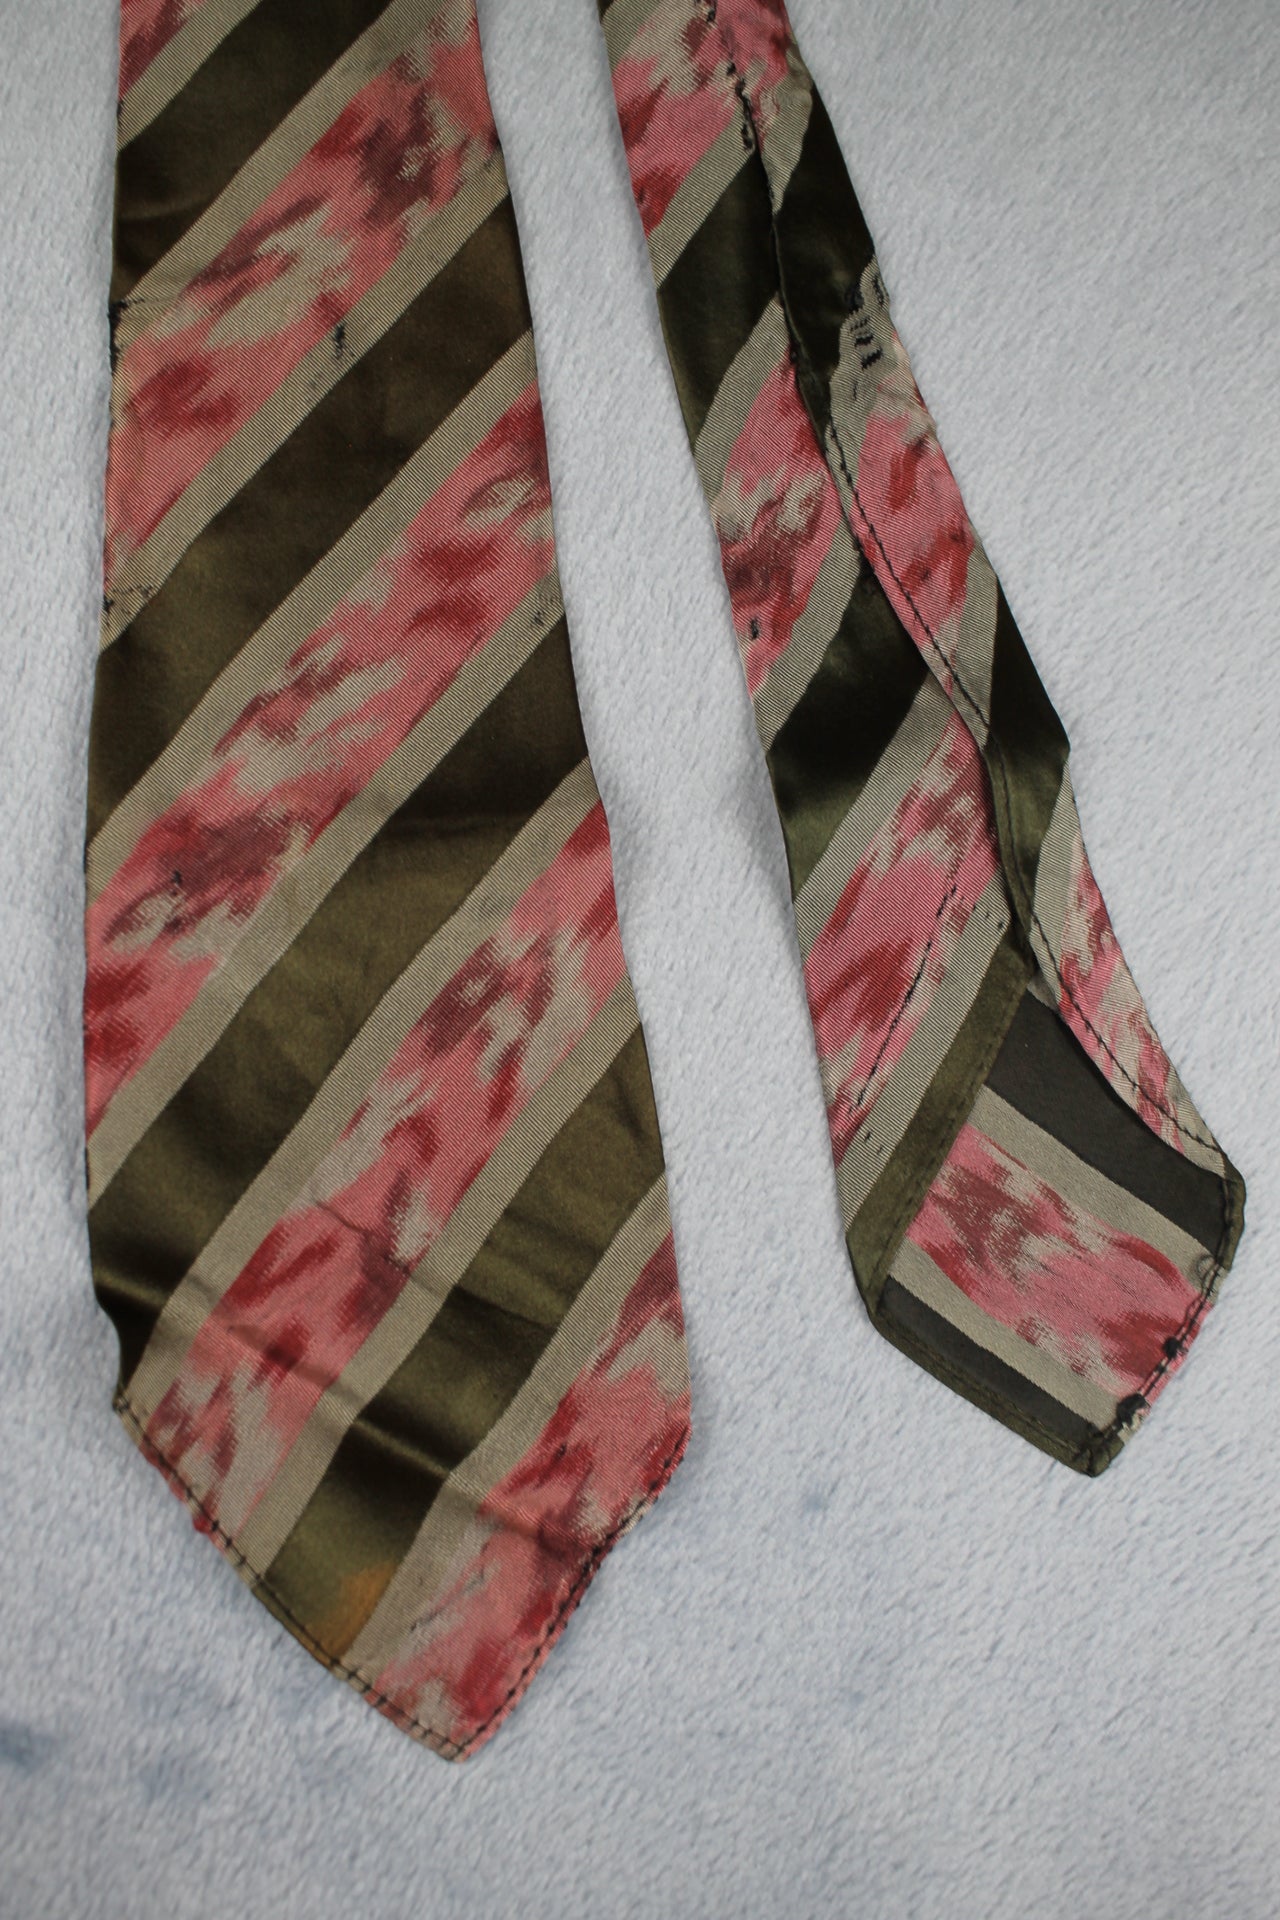 Vintage 1940s handmade green pink striped swing tie